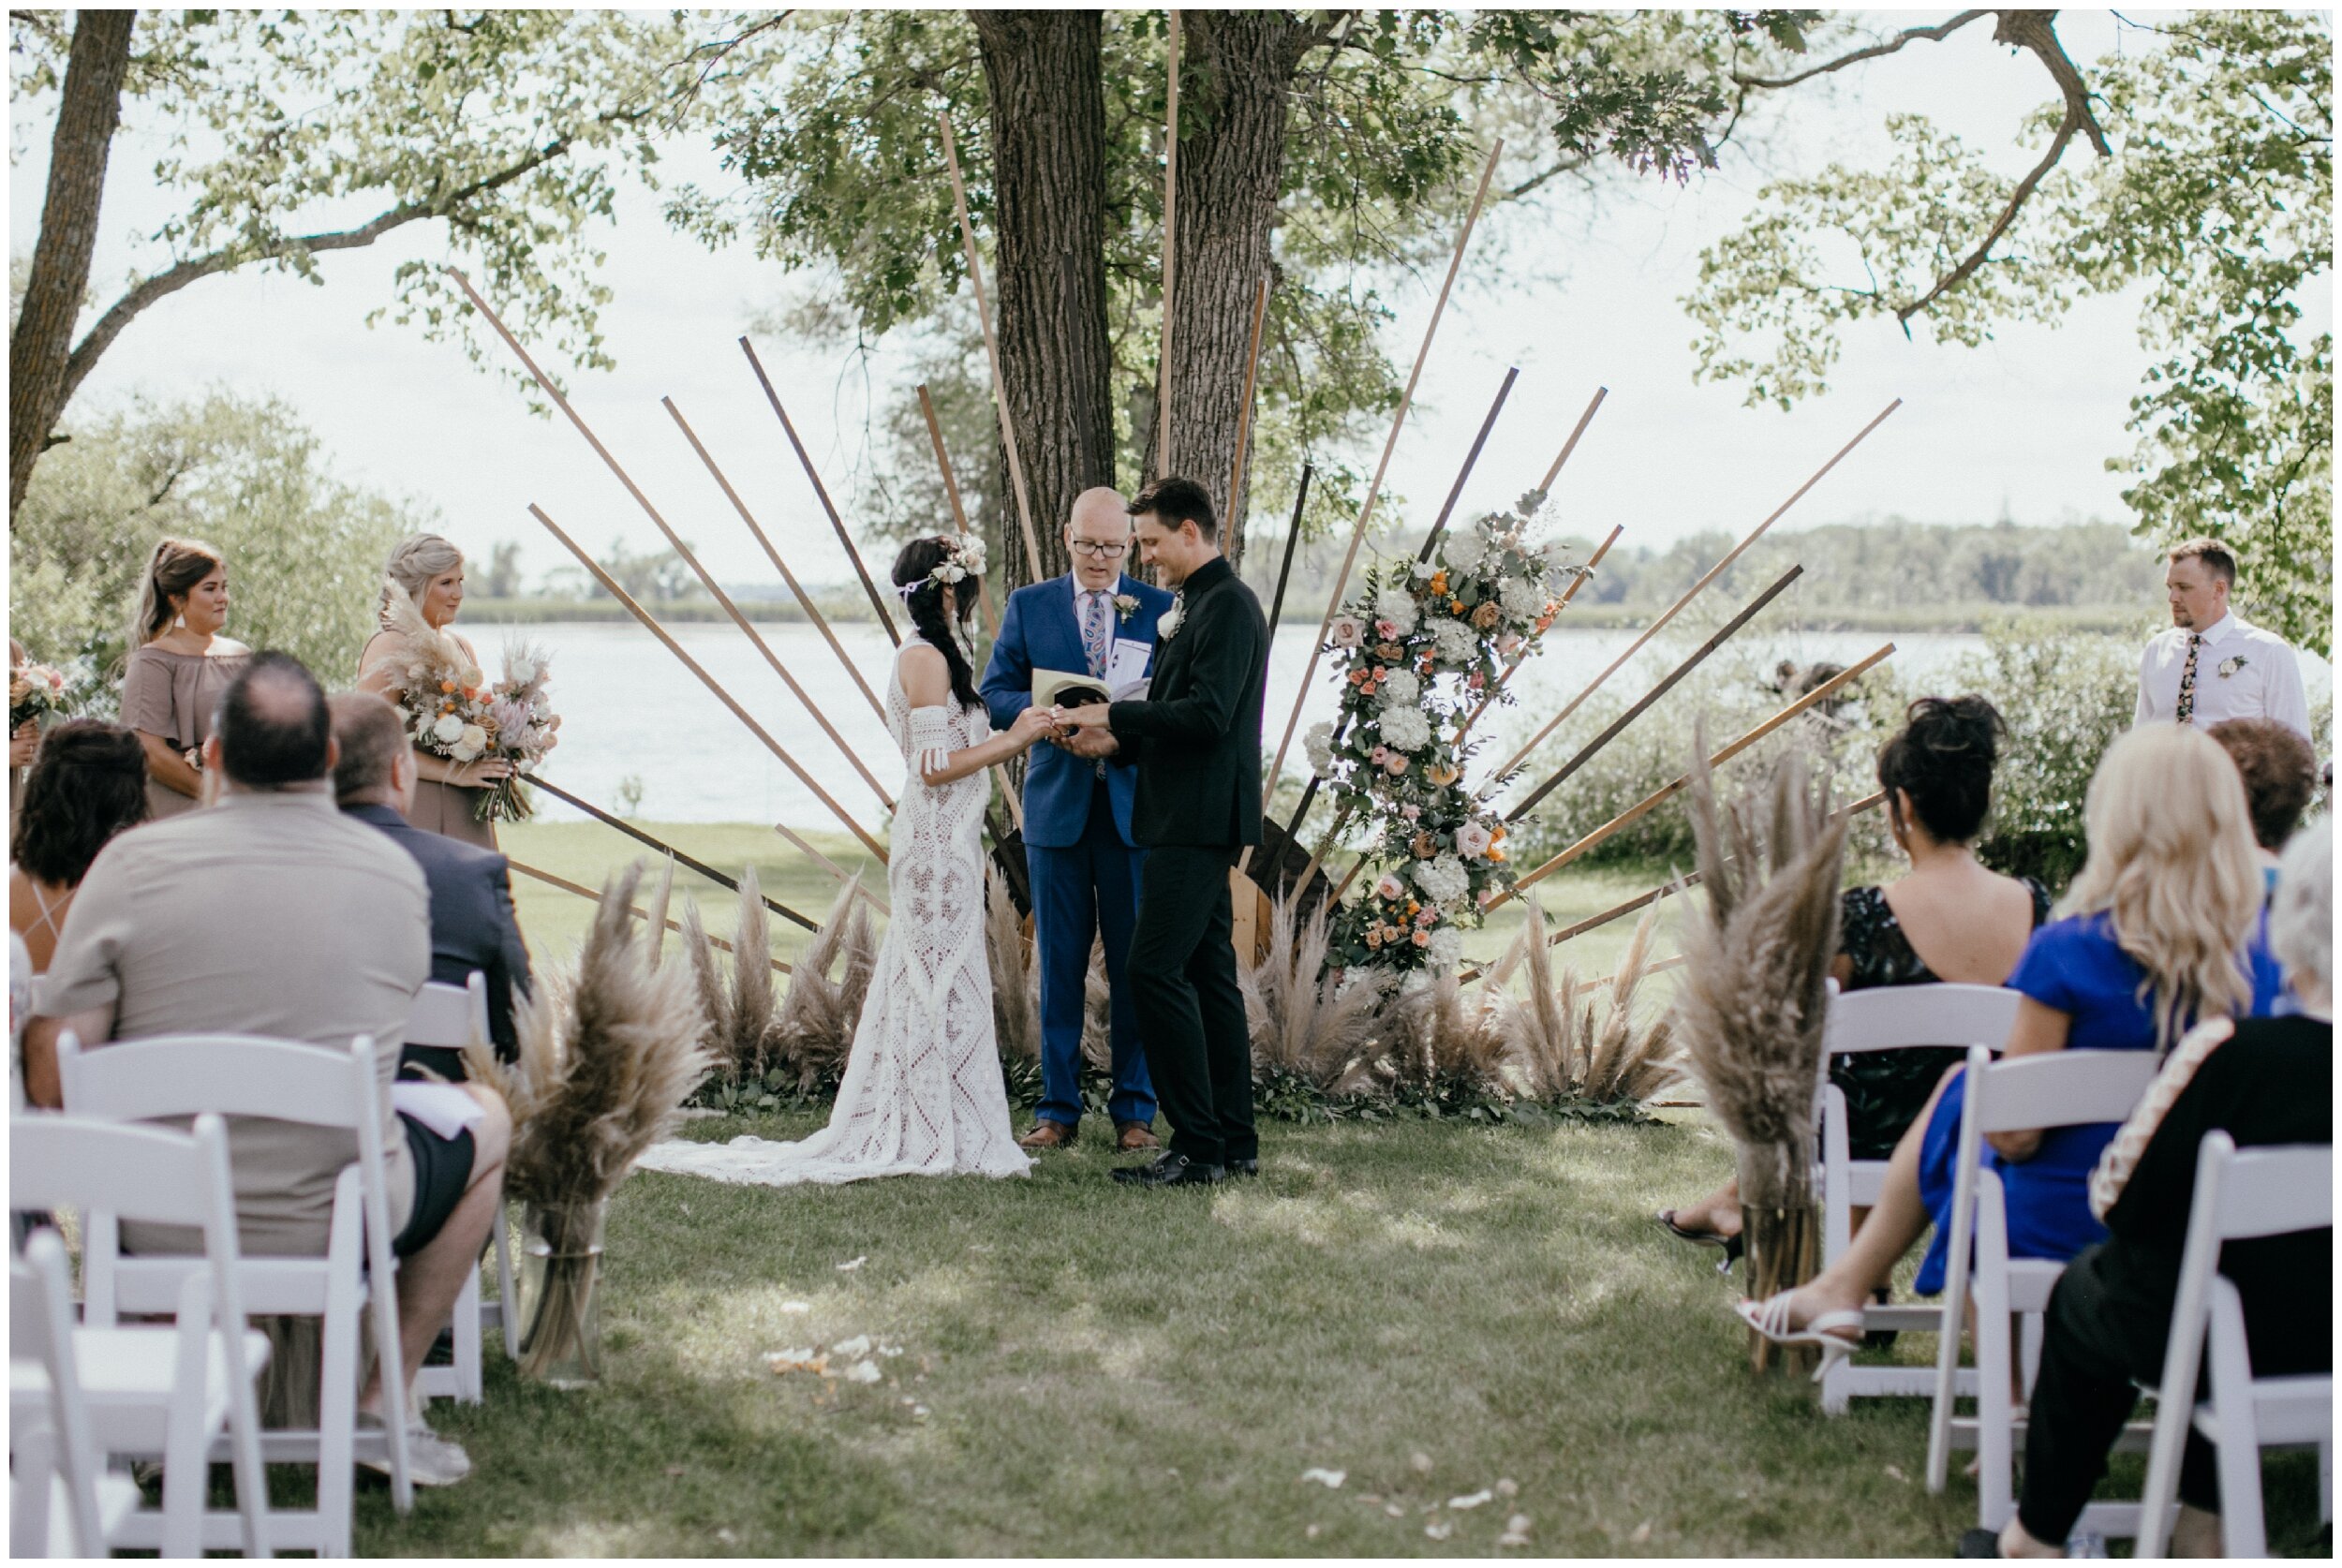 1970's inspired boho backyard wedding ceremony at private lakeside estate in northern Minnesota